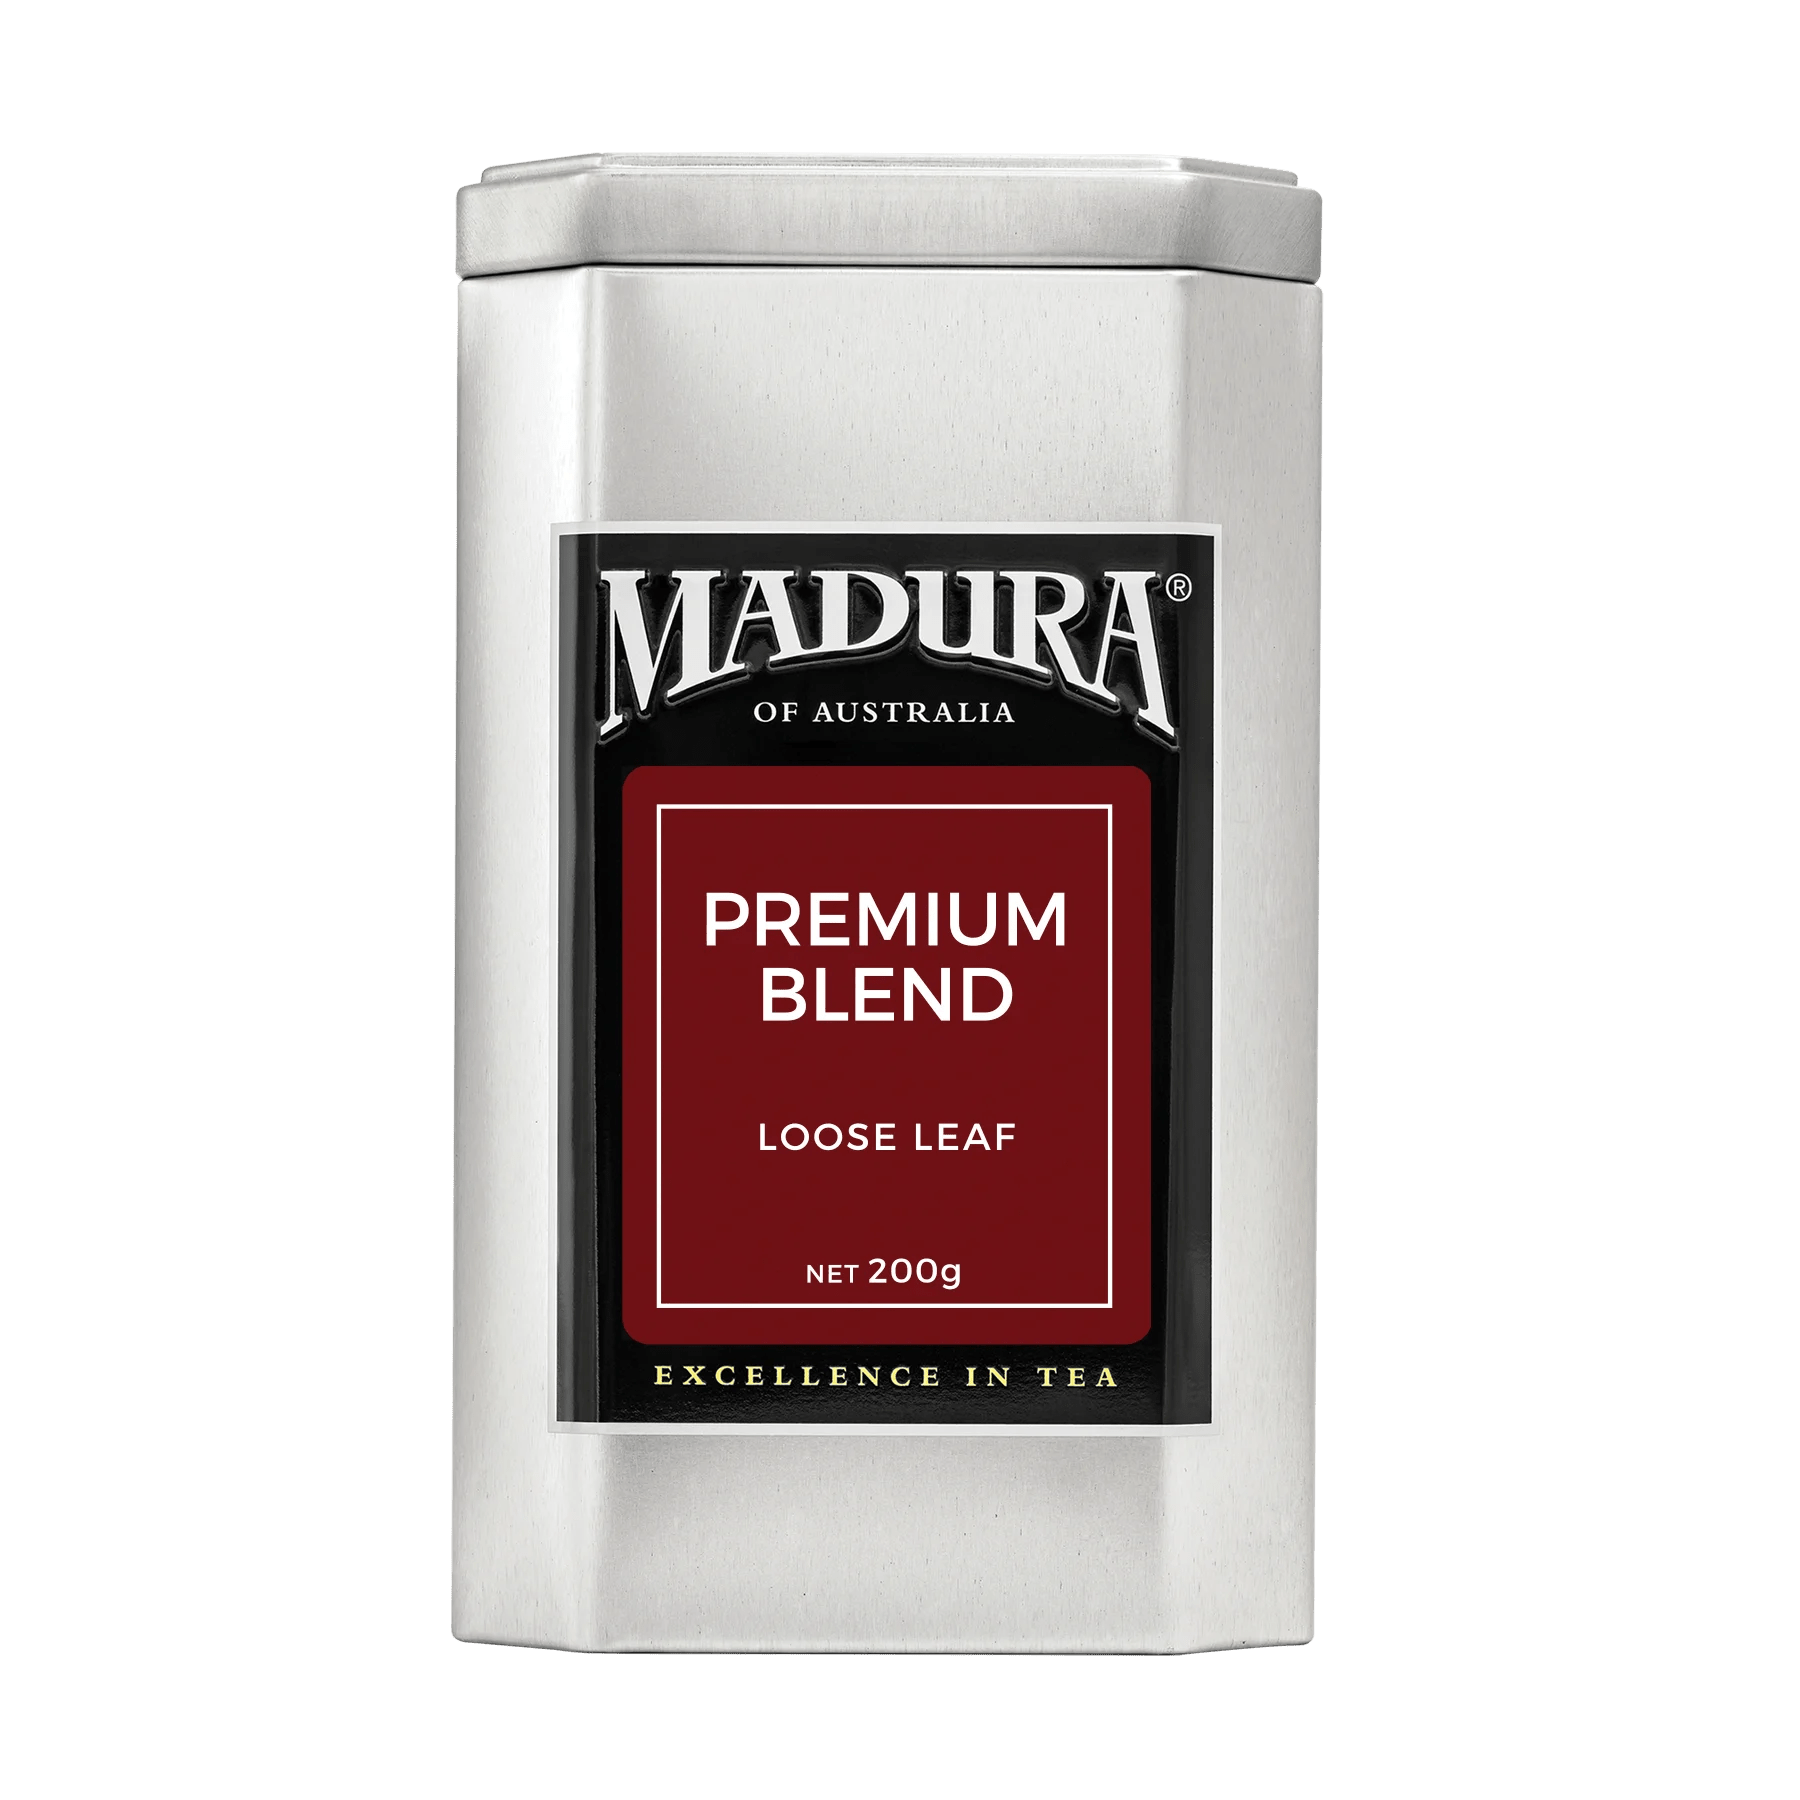 Premium Blend 200g Leaf Tea in Caddy - Madura Tea